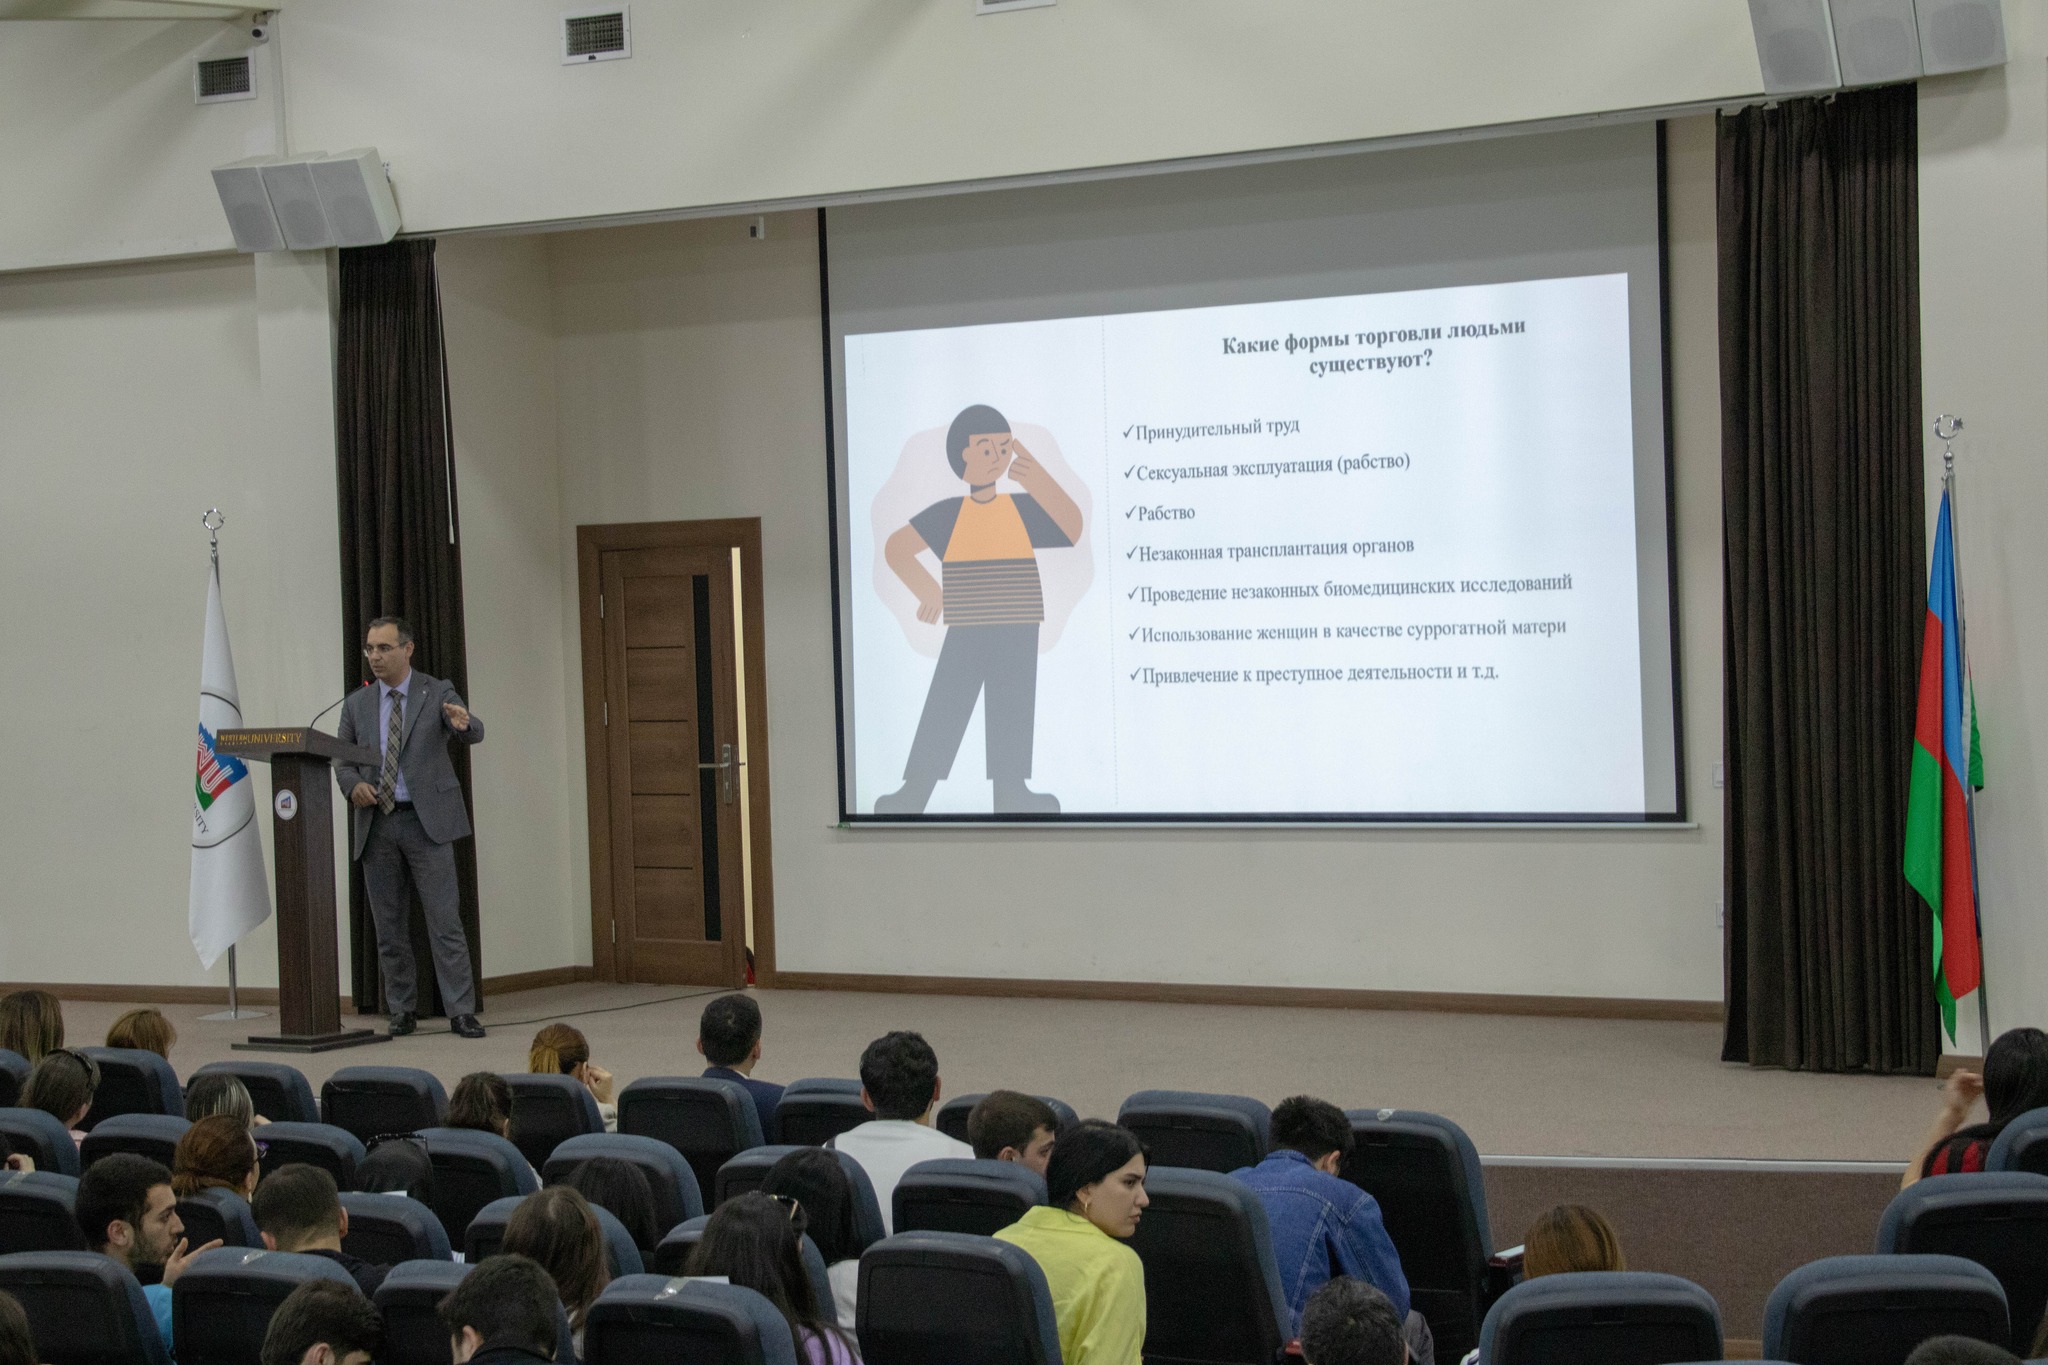 Seminar was Organized for WCU Students